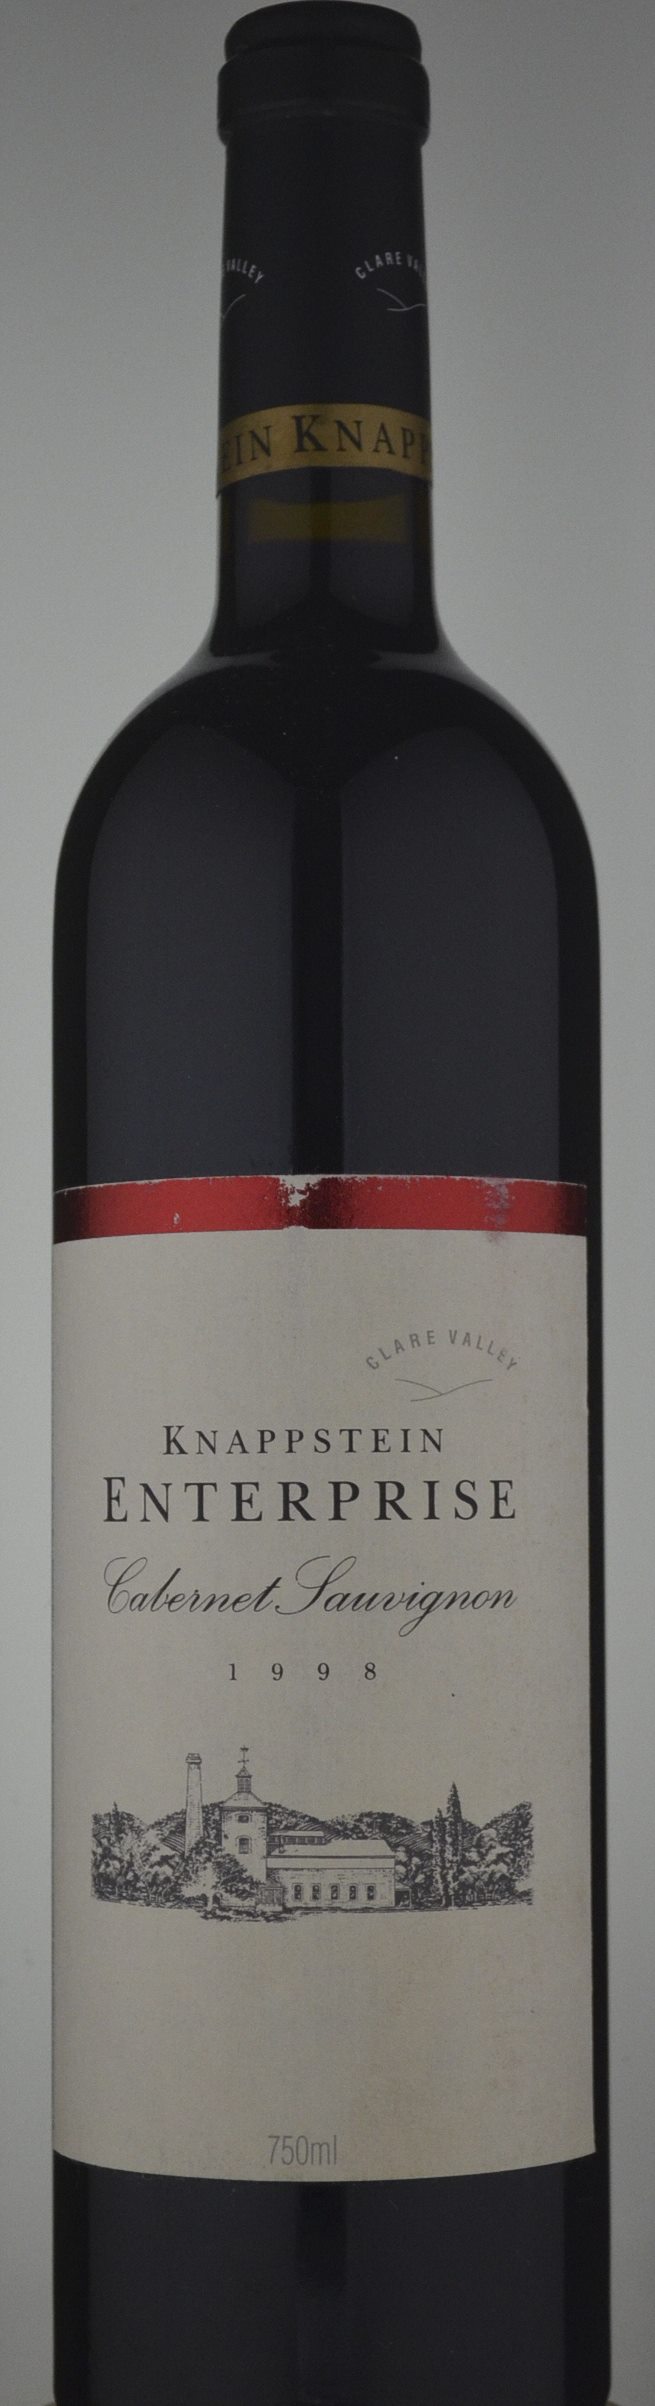 Knappstein Enterprise Cabernet Sauvignon 1998